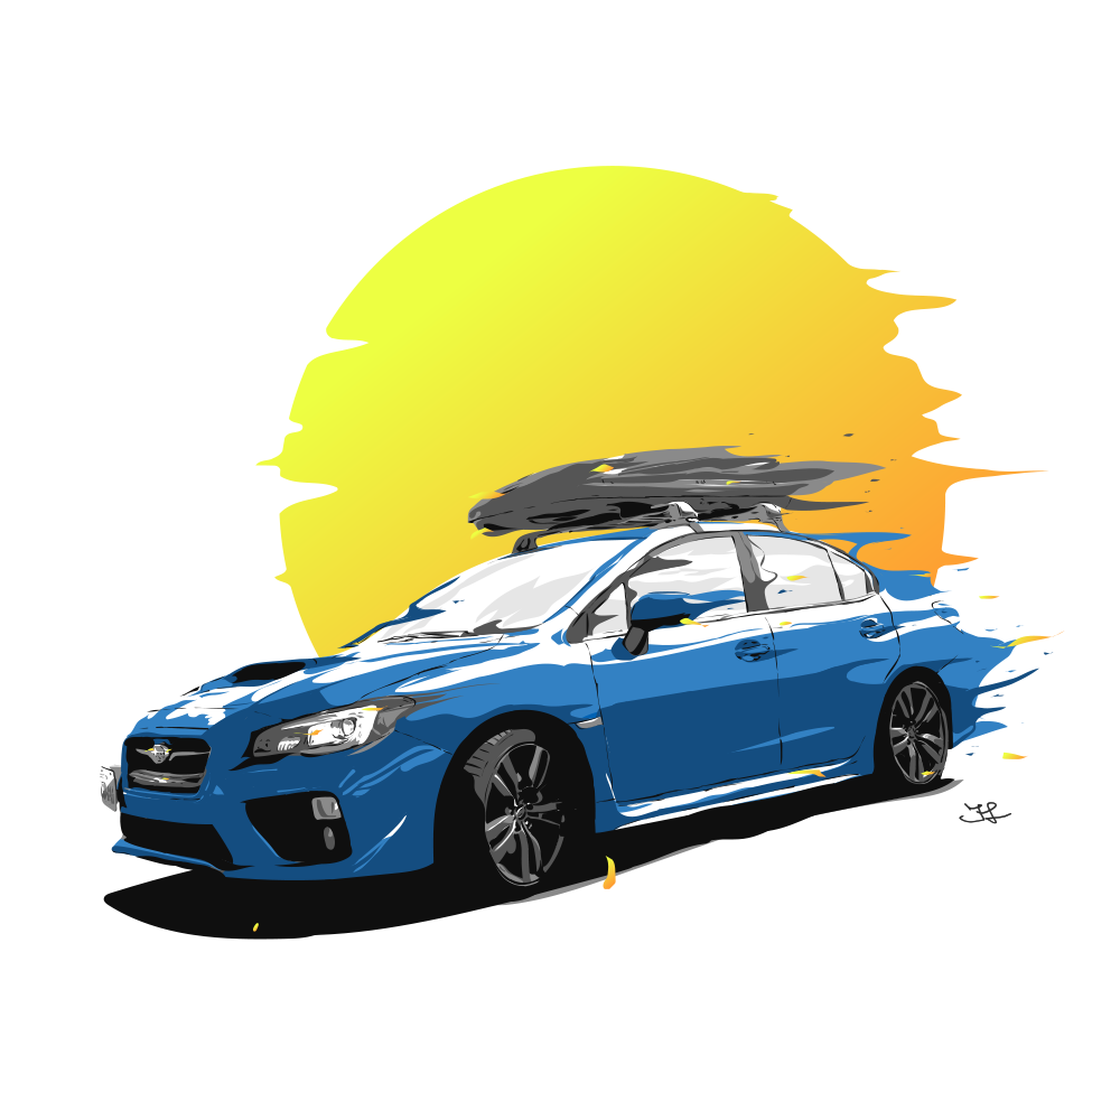 Digital car art illustration of my 2016 Subaru WRX.